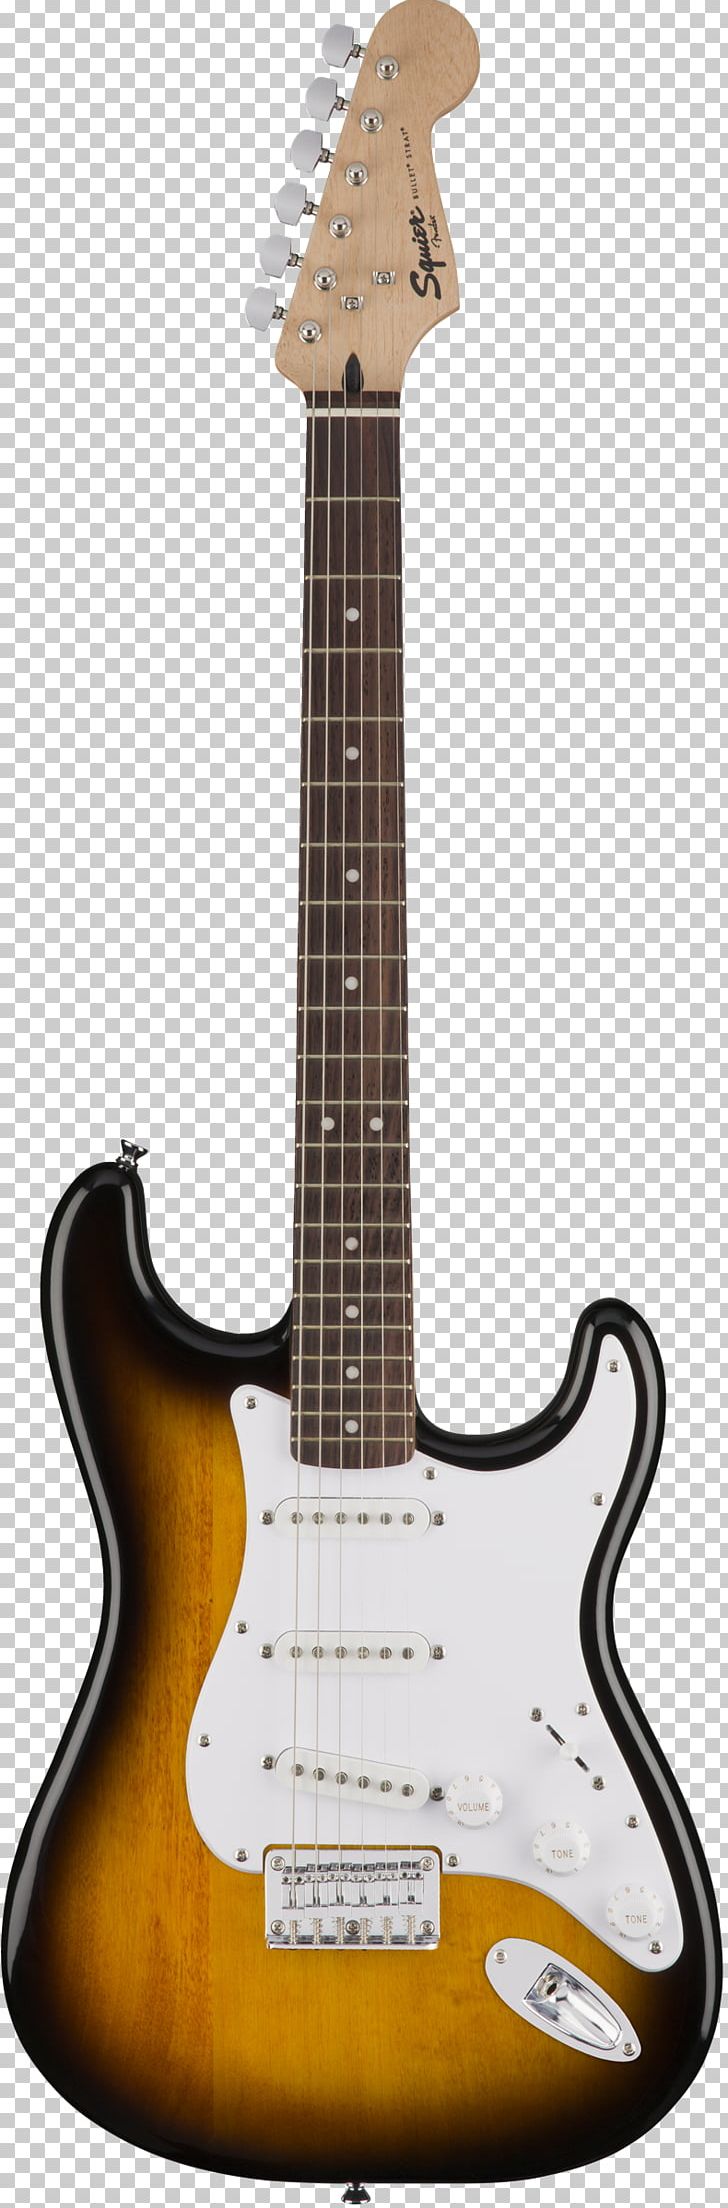 Fender Stratocaster Fender Telecaster Fender Bullet The STRAT Fender Musical Instruments Corporation PNG, Clipart, Acoustic Electric Guitar, Guitar Accessory, Jazz Guitarist, Musical Instrument, Musical Instruments Free PNG Download